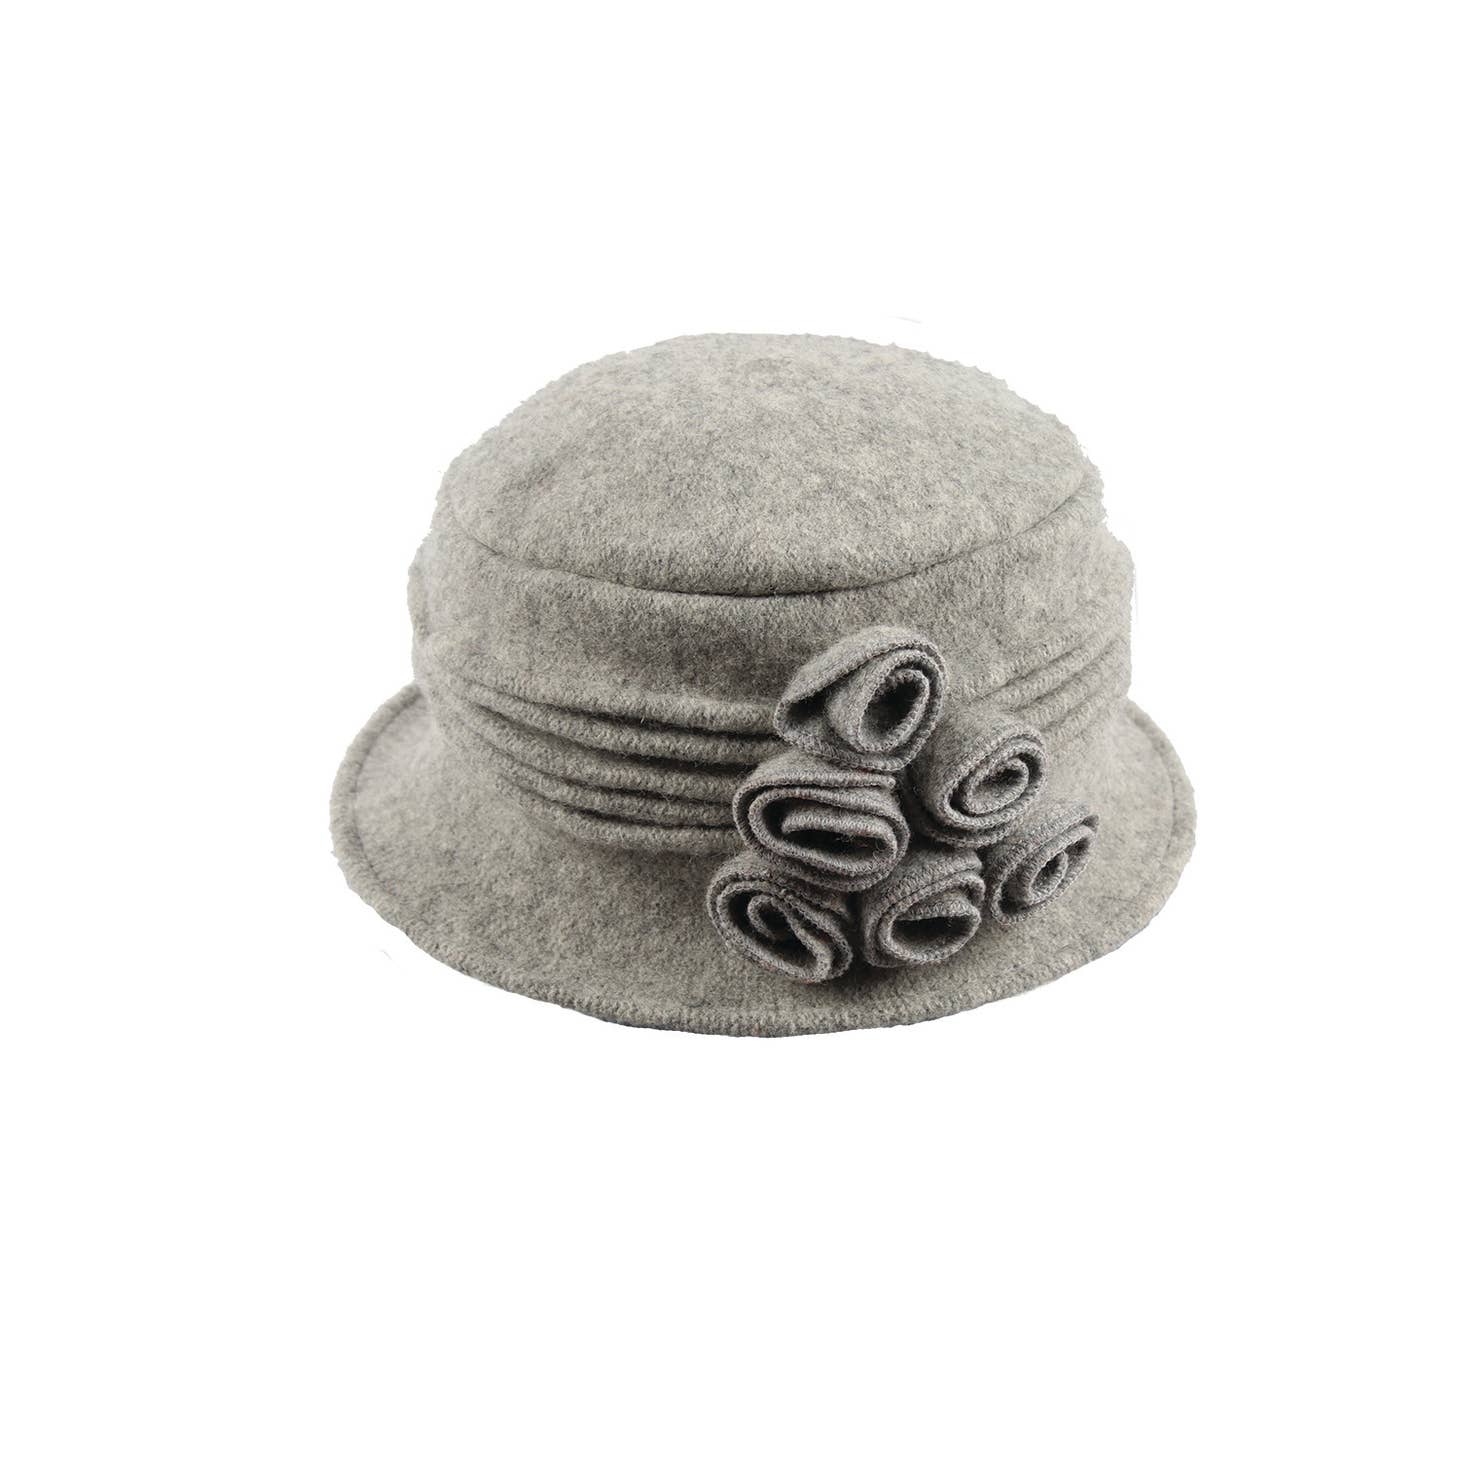 Women's Winter Hat. Ribbed Boiled Wool Winter Cloche Hat